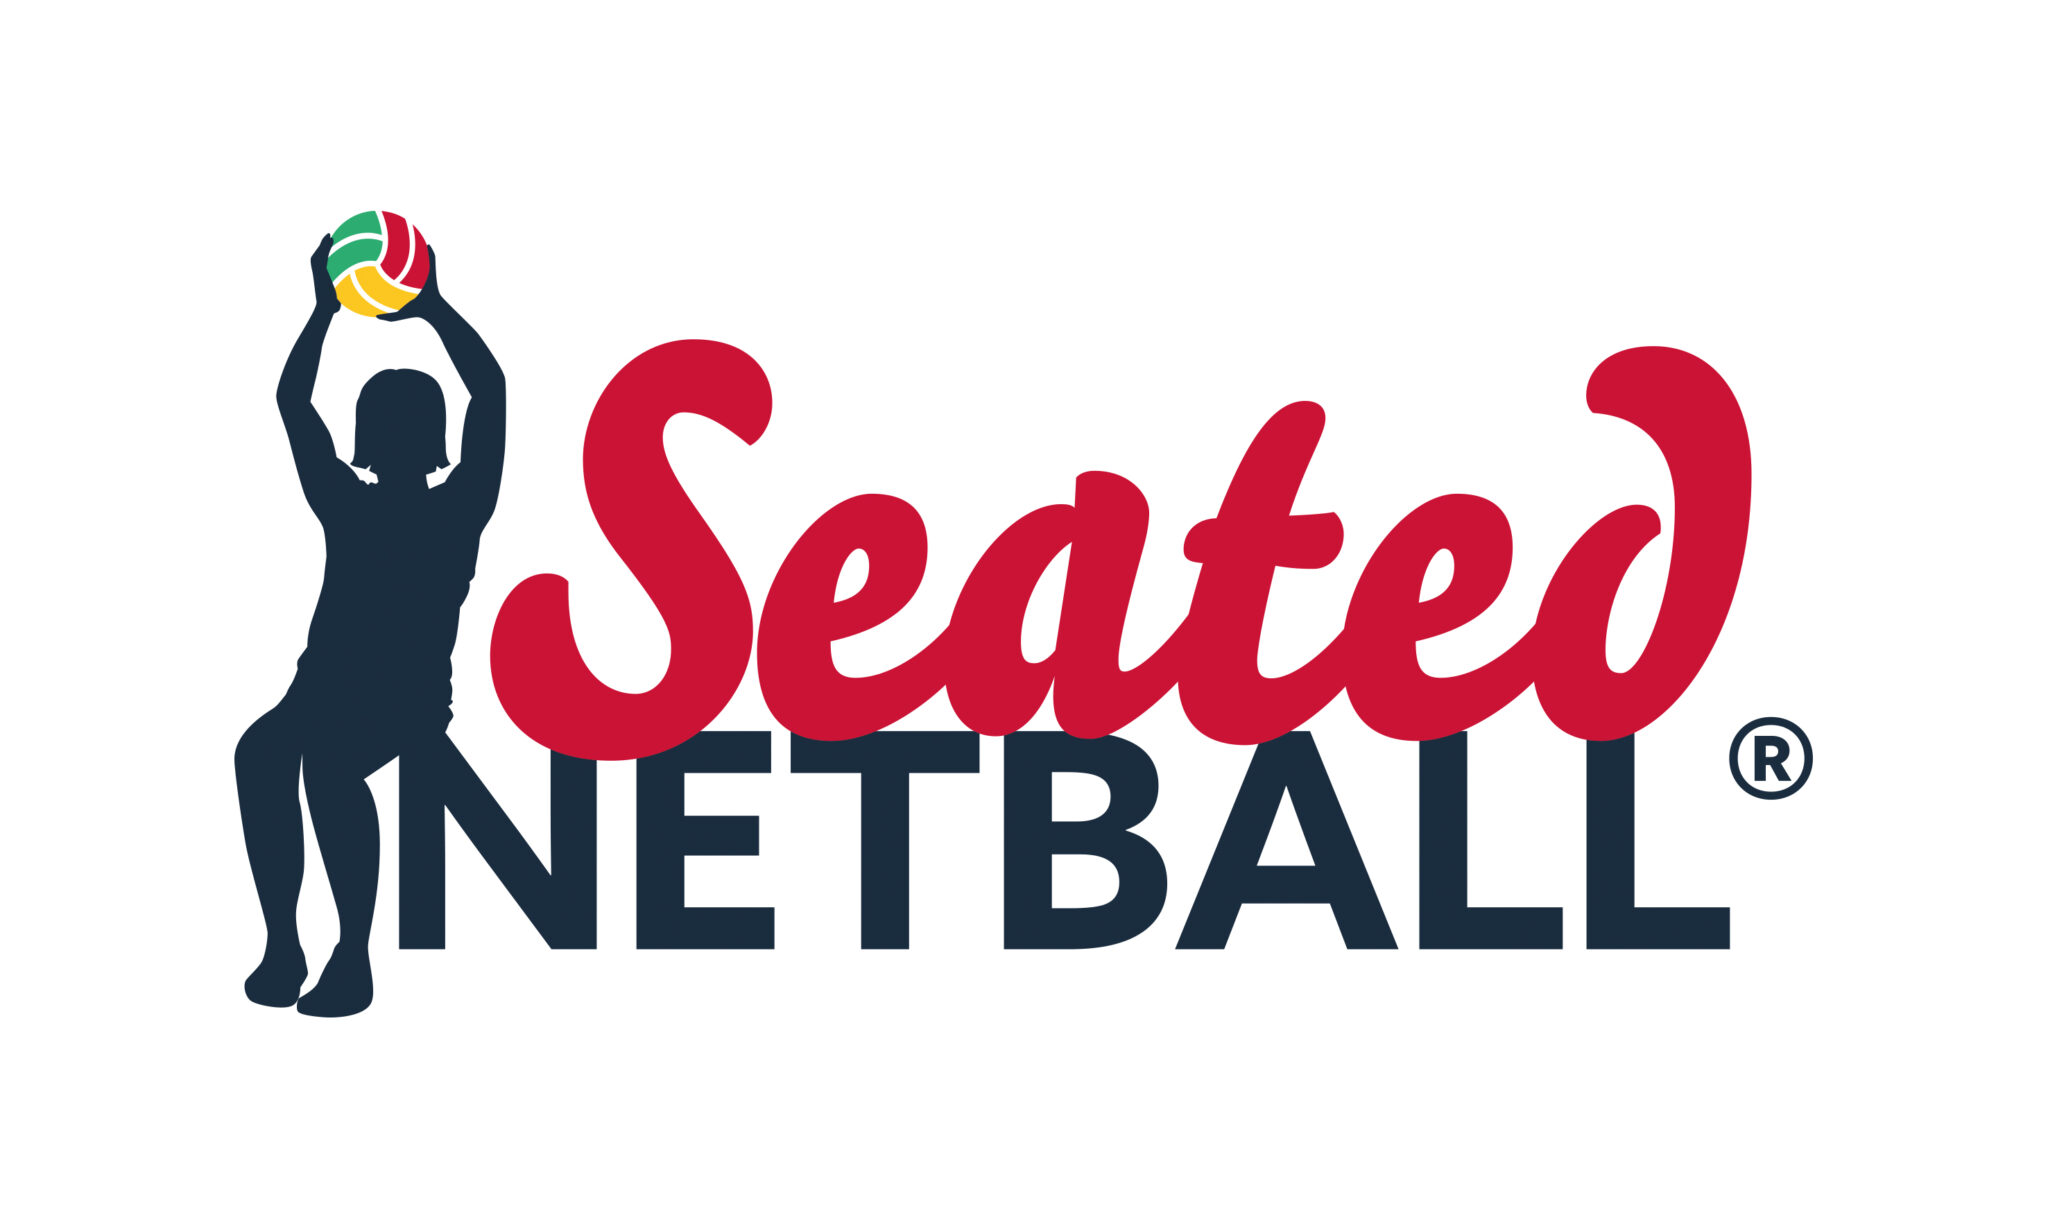 Seated Netball logo